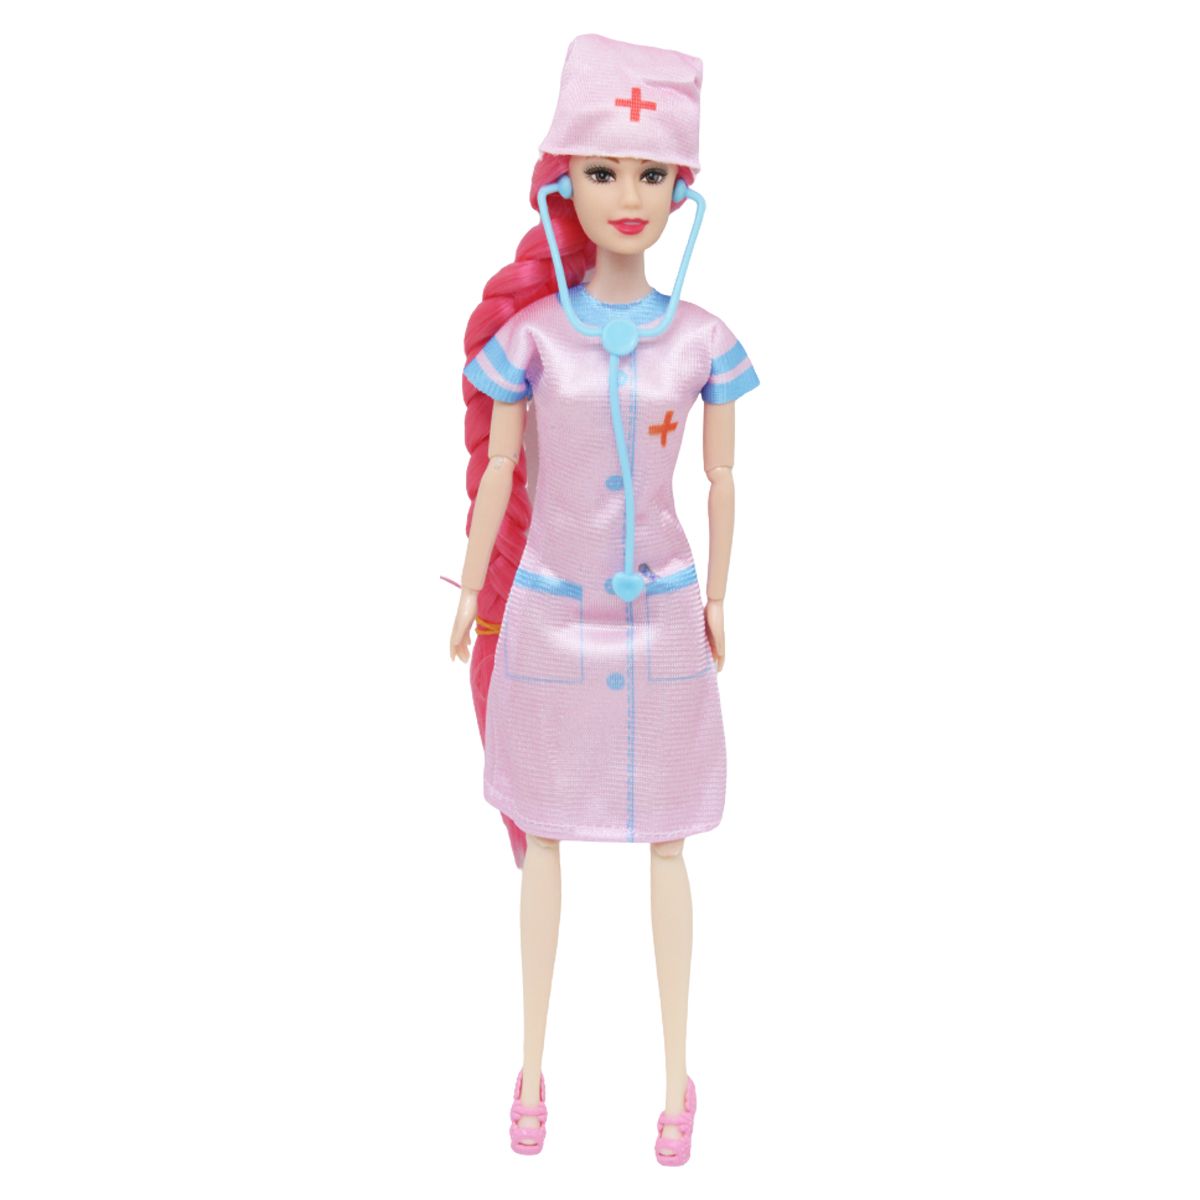 Лялька "Медсестра" у рожевому